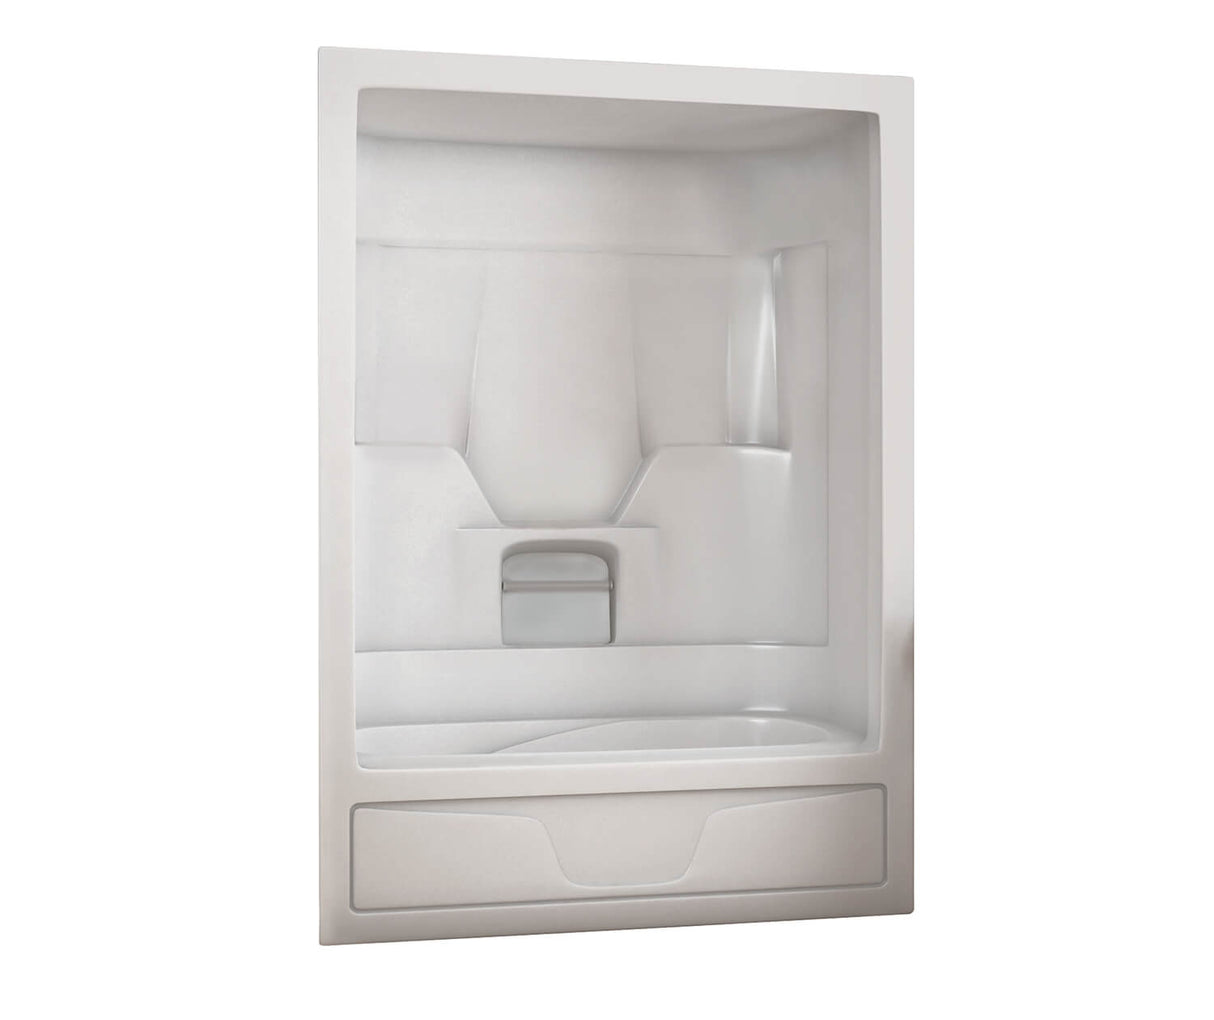 MAAX 101023-000-001-001 Aspen 60 x 31 Acrylic Alcove Left-Hand Drain One-Piece Tub Shower in White